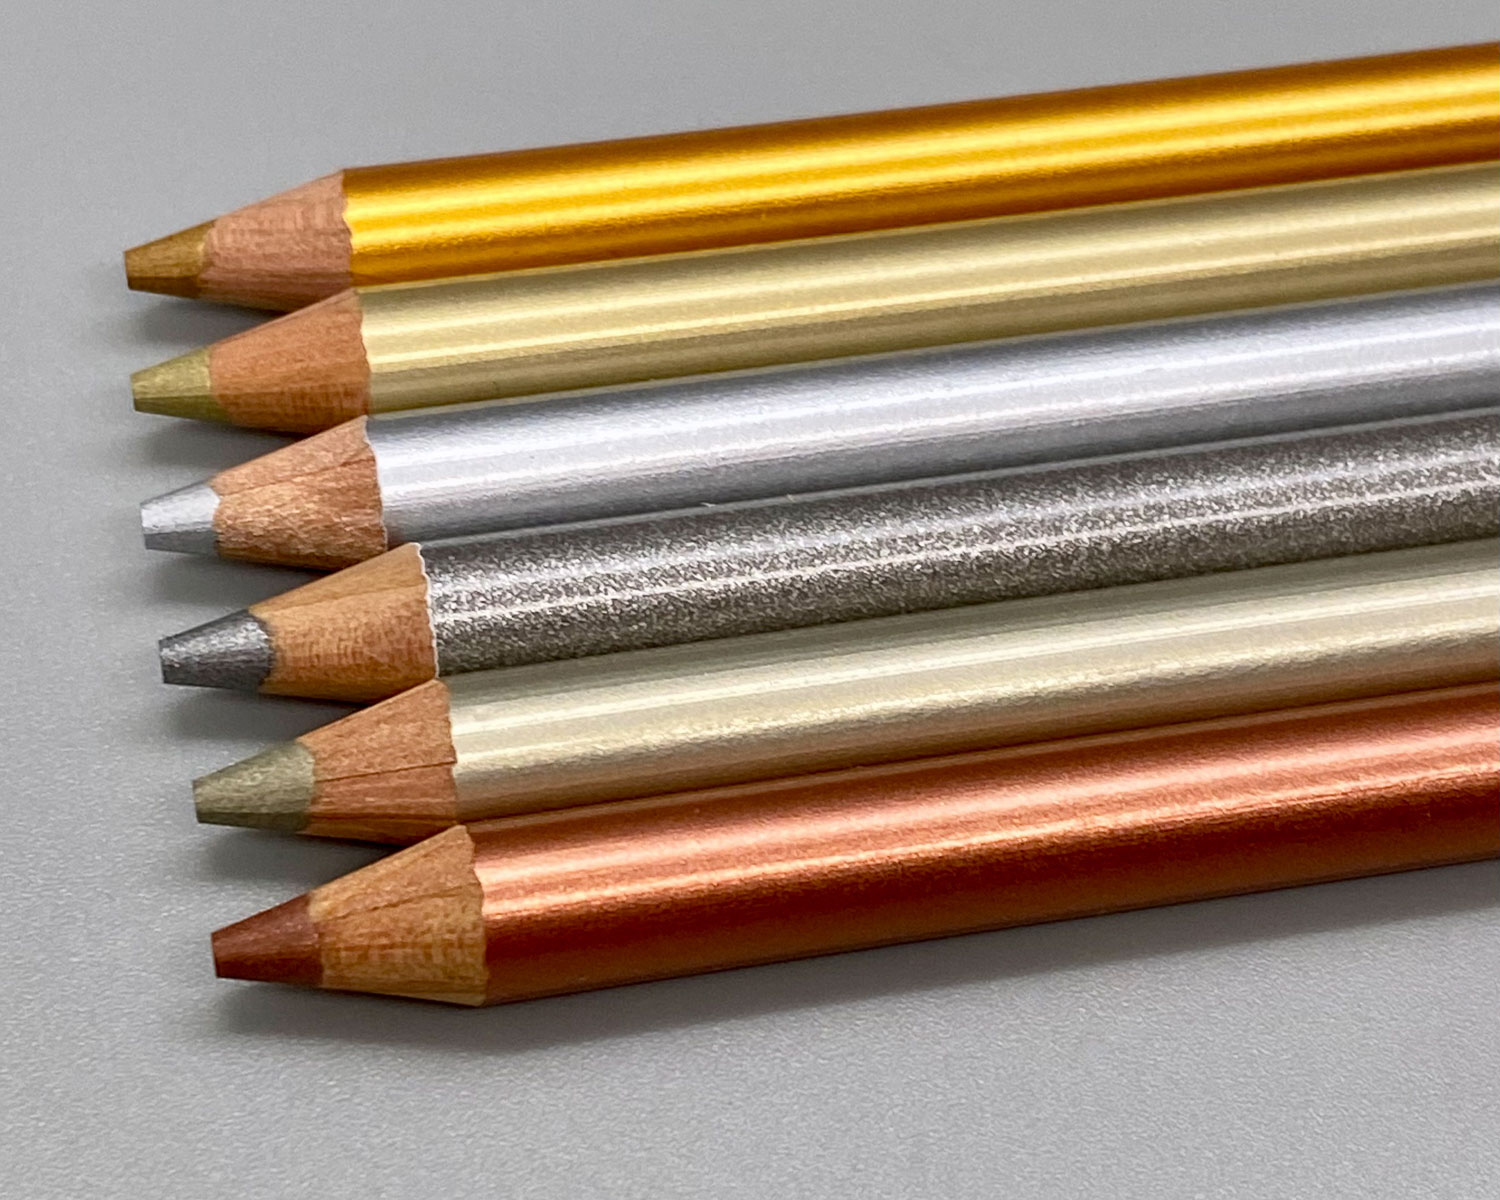 holbein metallic pencils